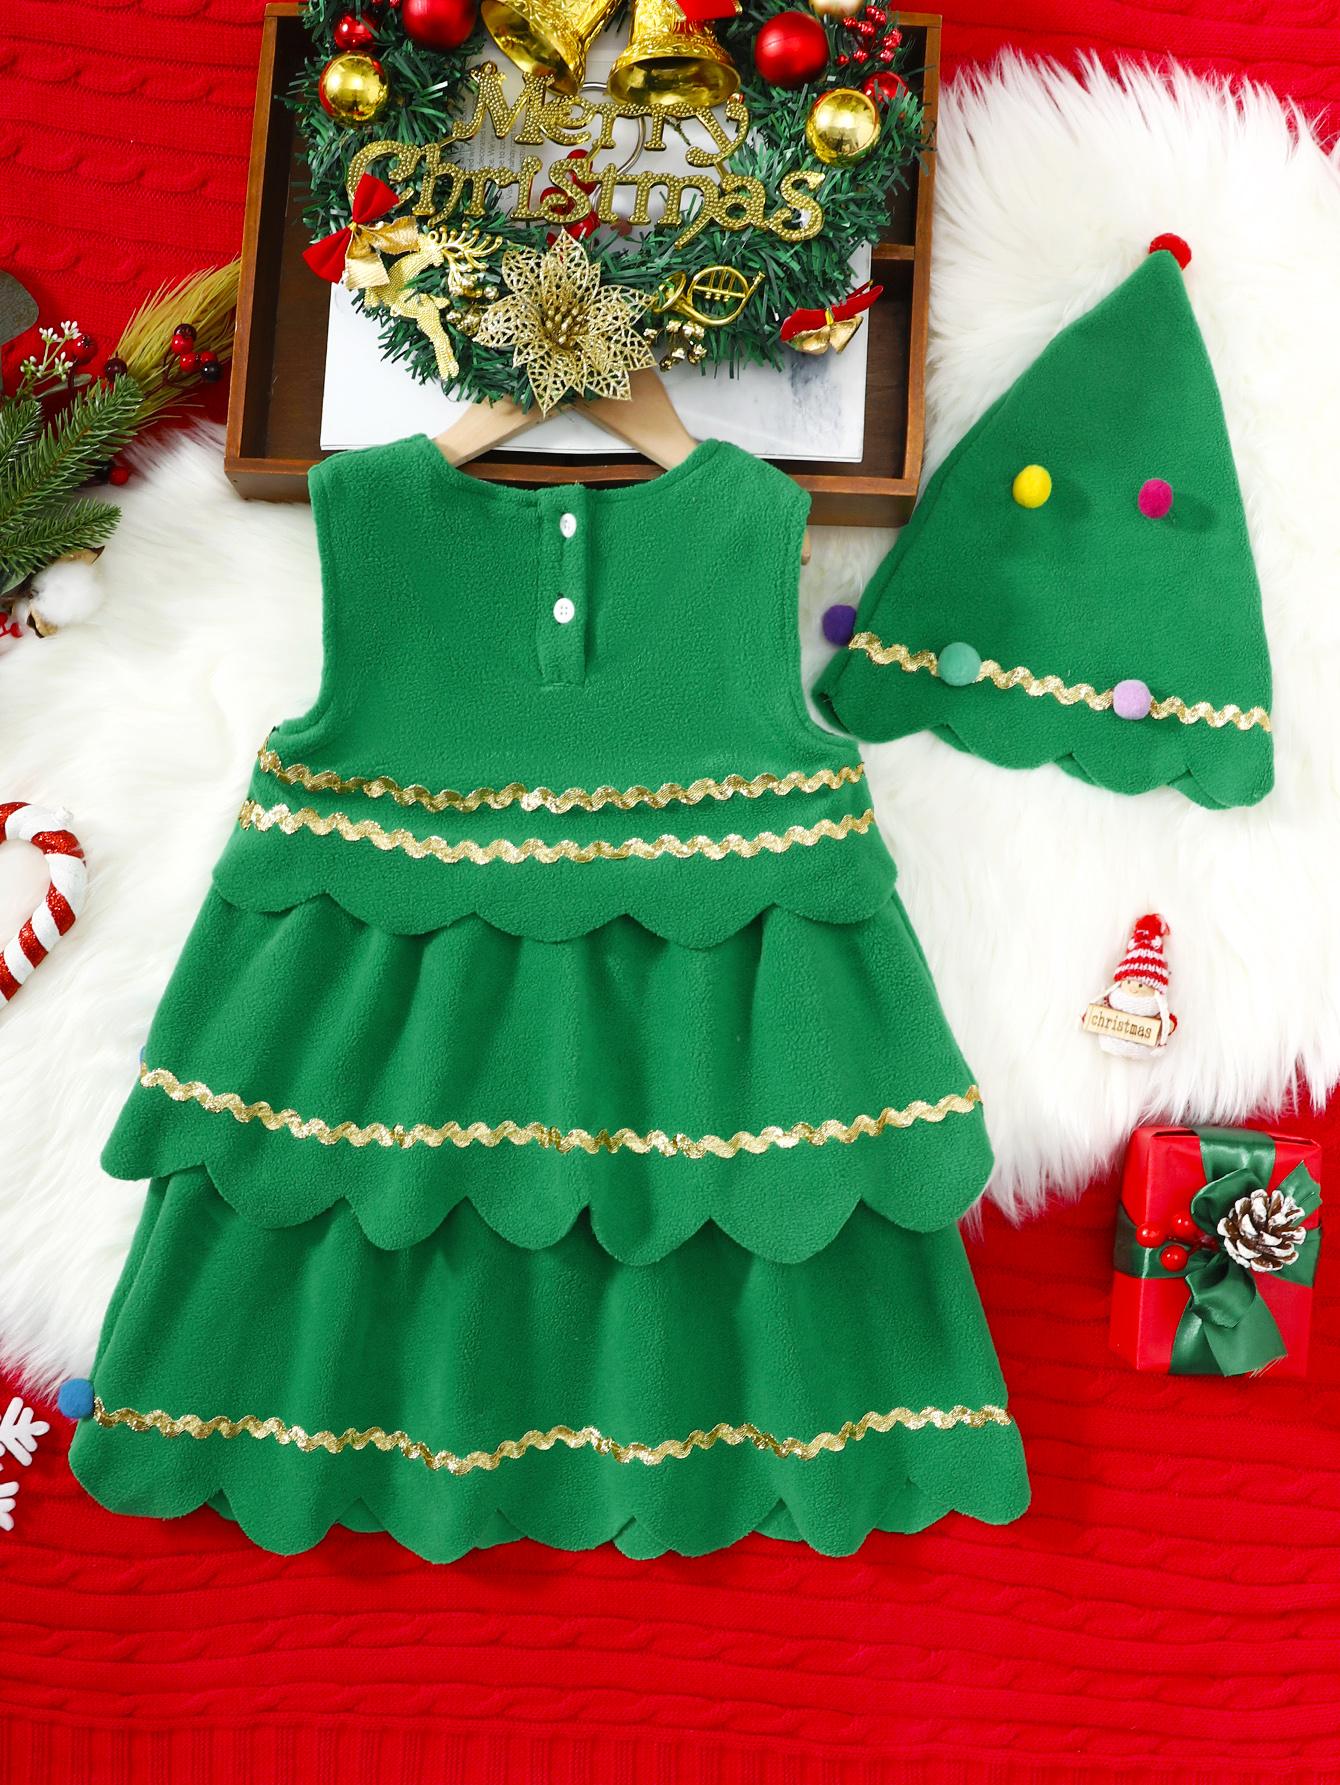 4-7Y Ready Stock  Kid Toddler Girls Fall Winter Dress Sets Christmas Tree Shape Layered Sleeveless Dress With Hat 2Pcs Clothing Green Catpapa 462308163